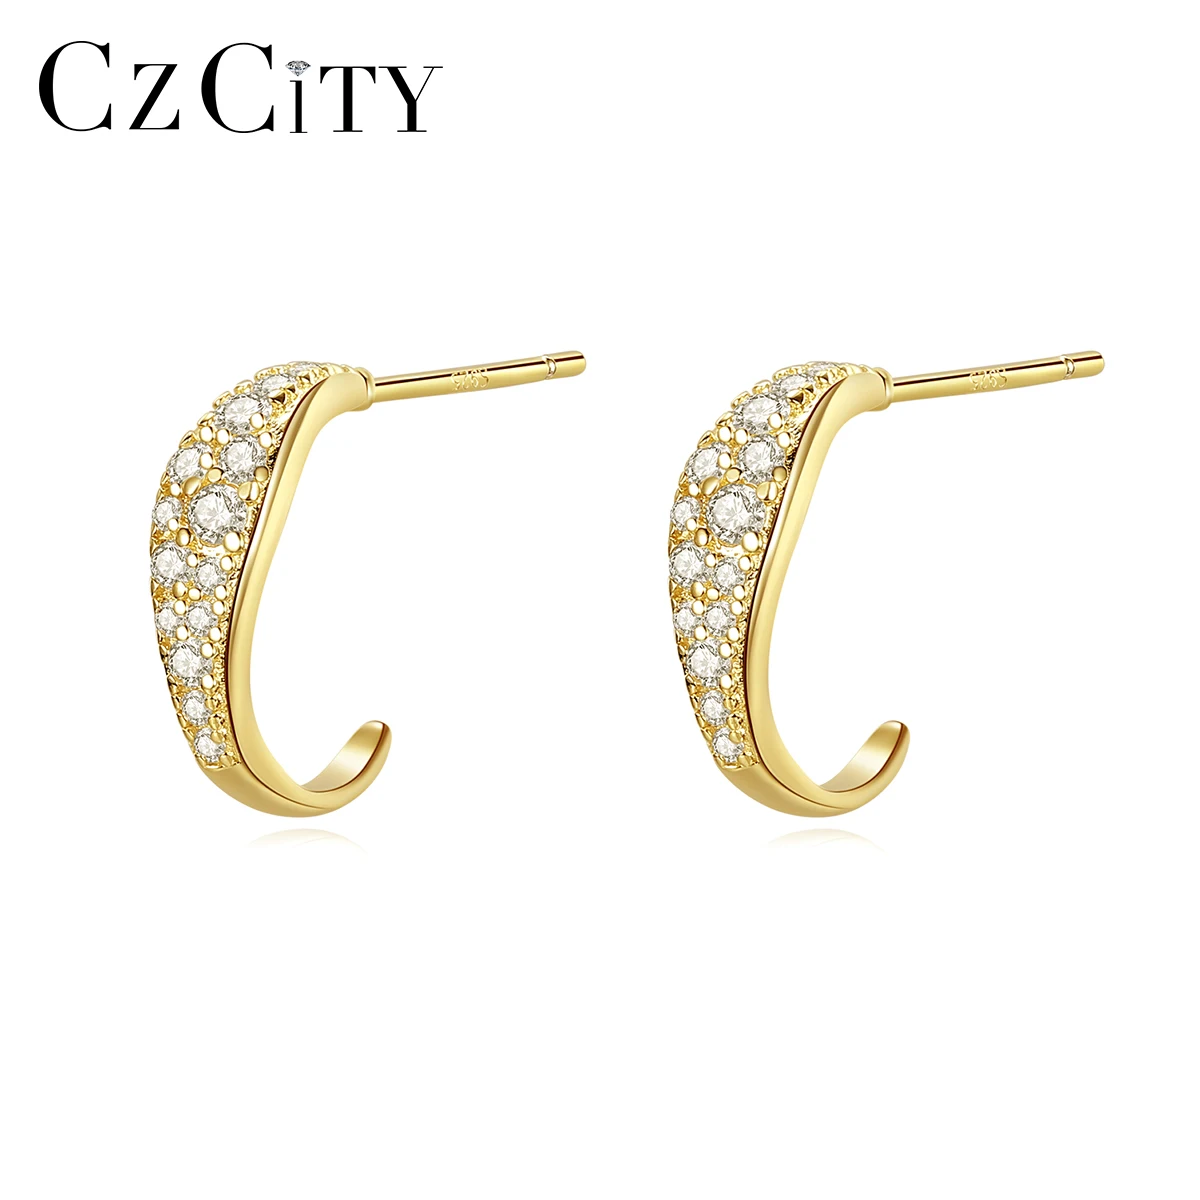 

CZCITY New 925 Sterling Silver Huggies Hoop Earrings for Women Fine Jewelry Geometric Tiny CZ Cuff Piercing Earrings Party Gifts